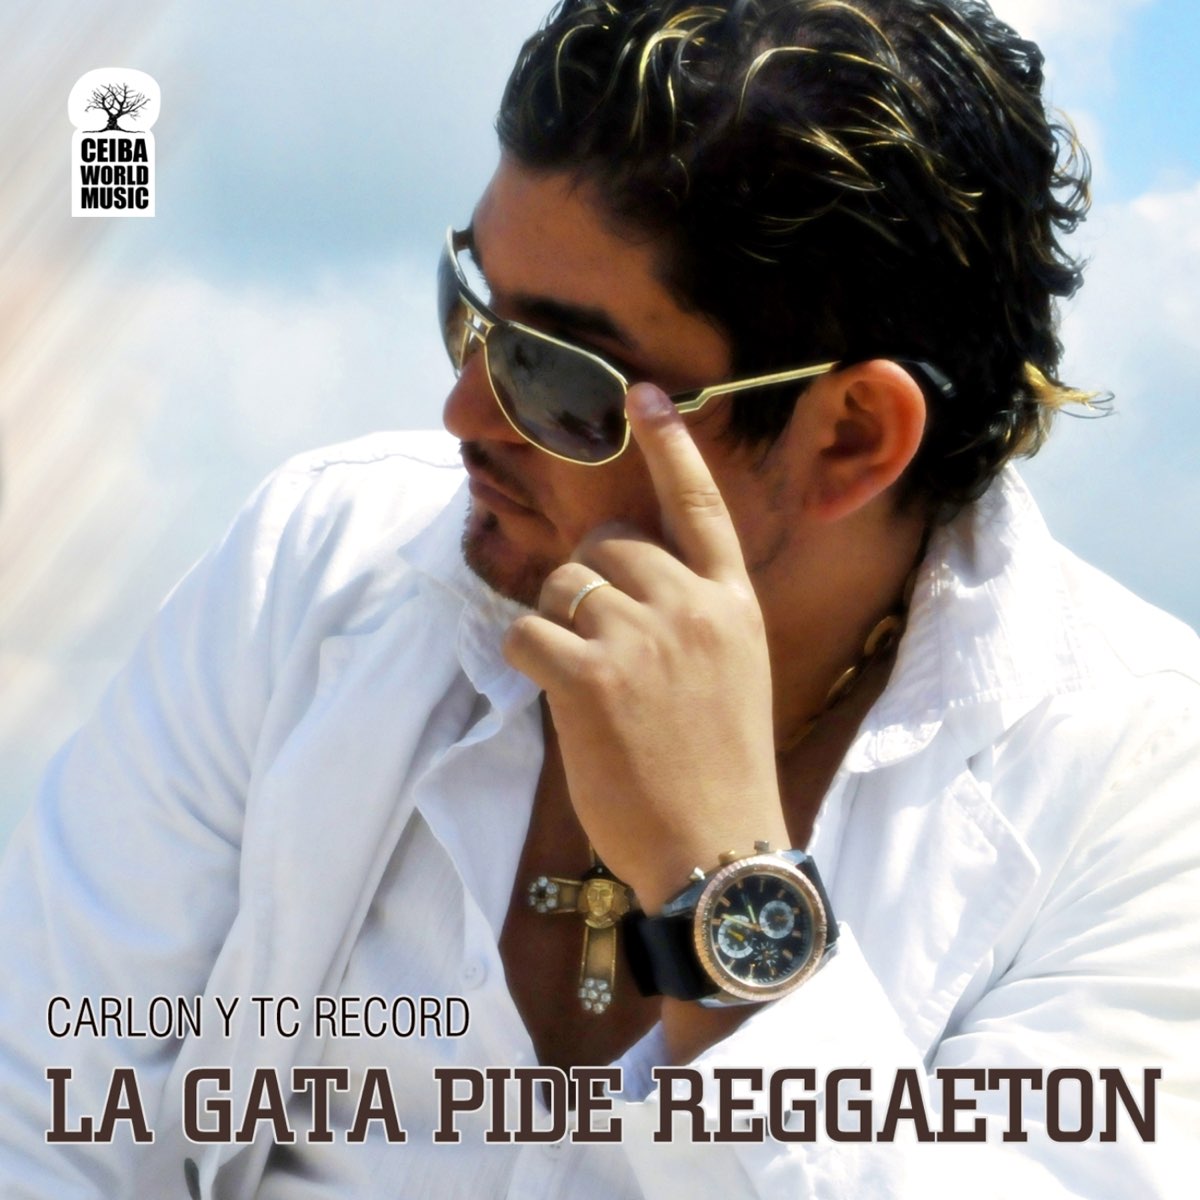 La Gata Pide Reggaeton by Carlon y TC Record on Apple Music